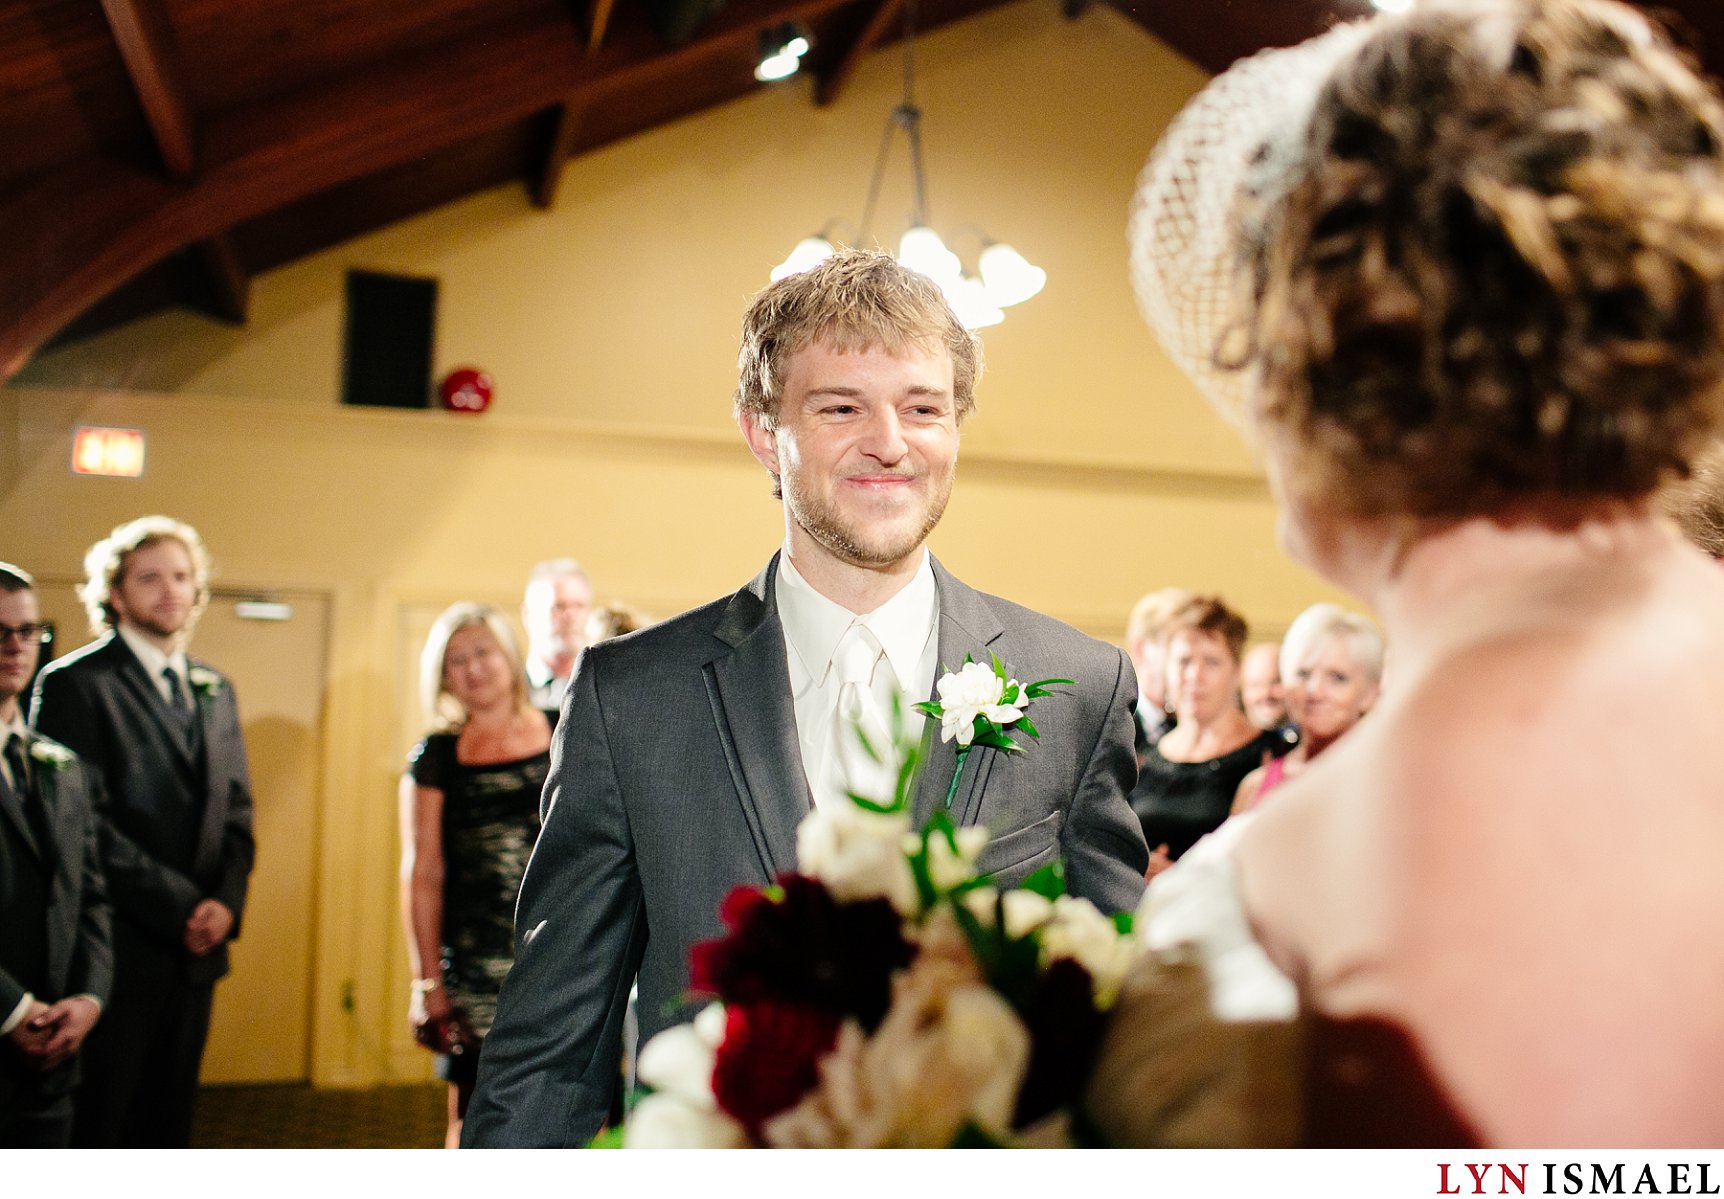 A very happy groom meets his bride at the altar.